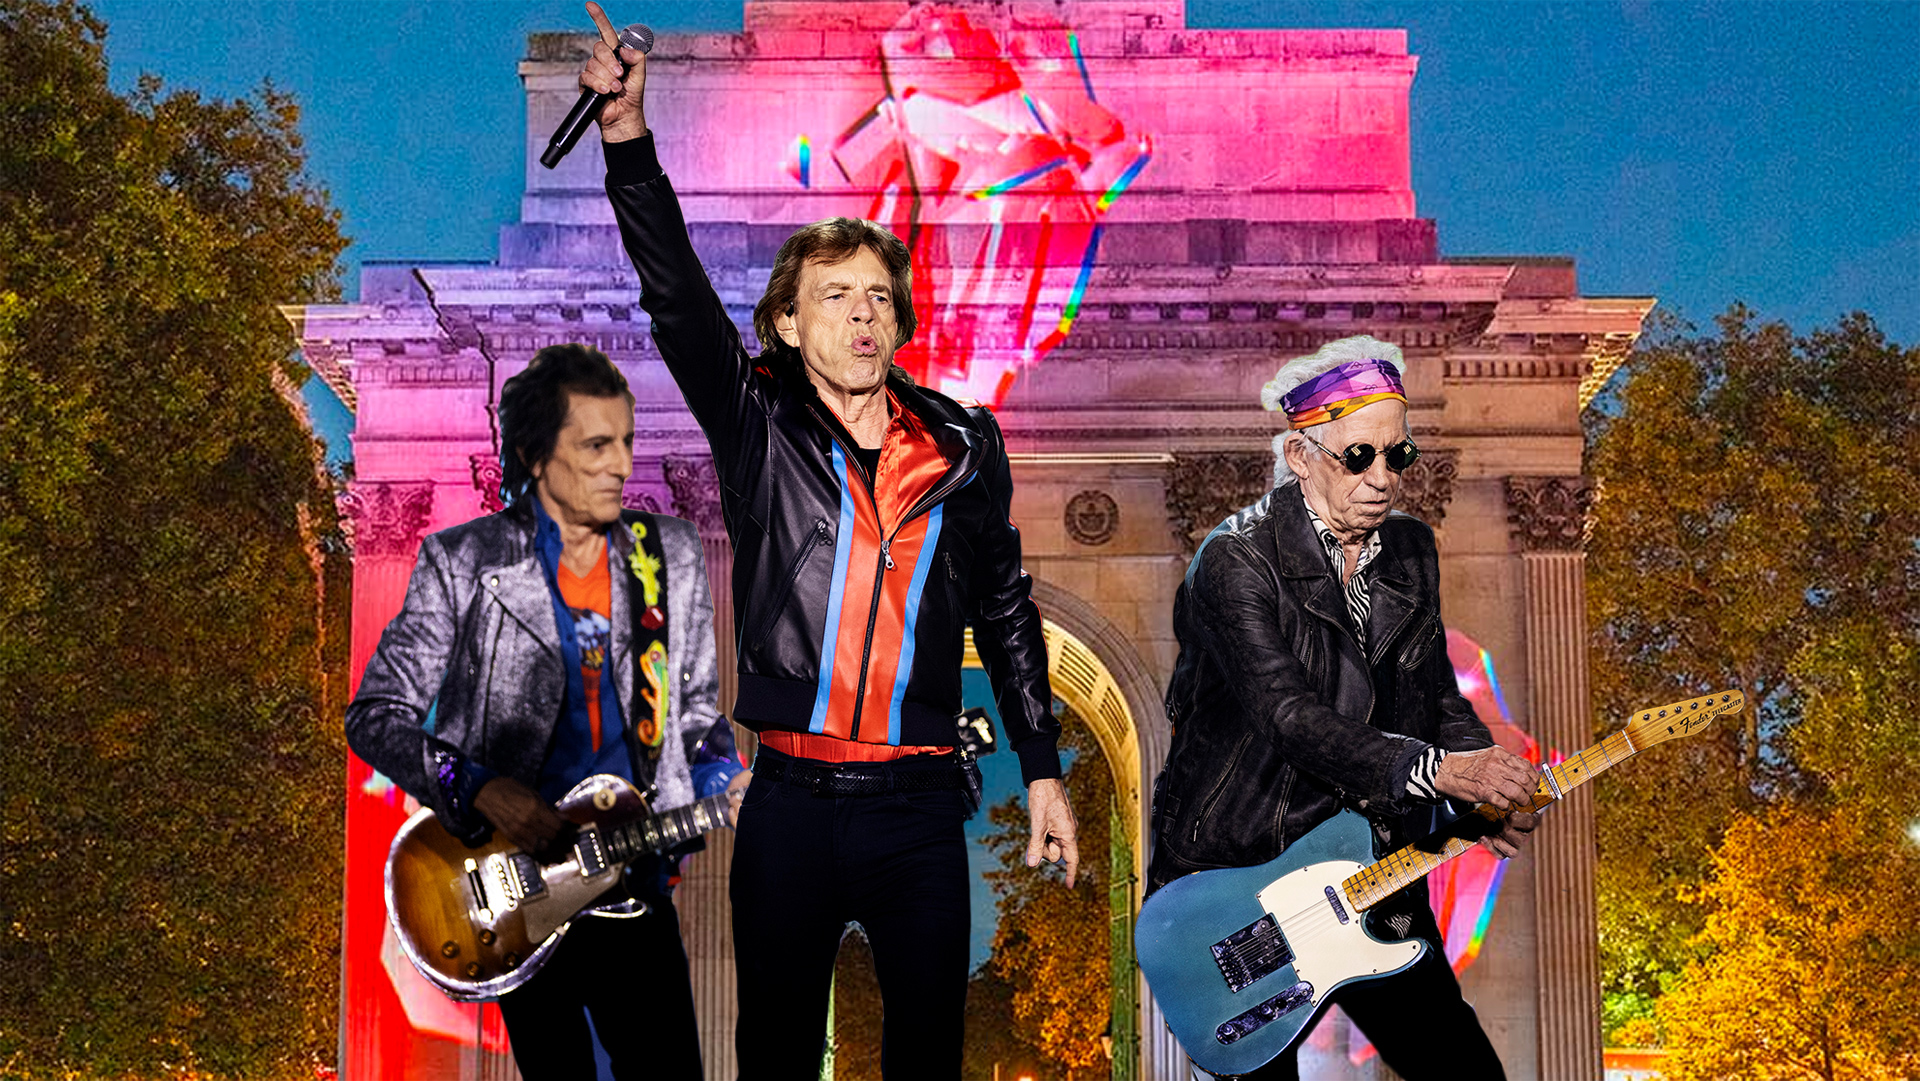 The Rolling Stones Announce 'Hackney Diamonds' Stadium Tour